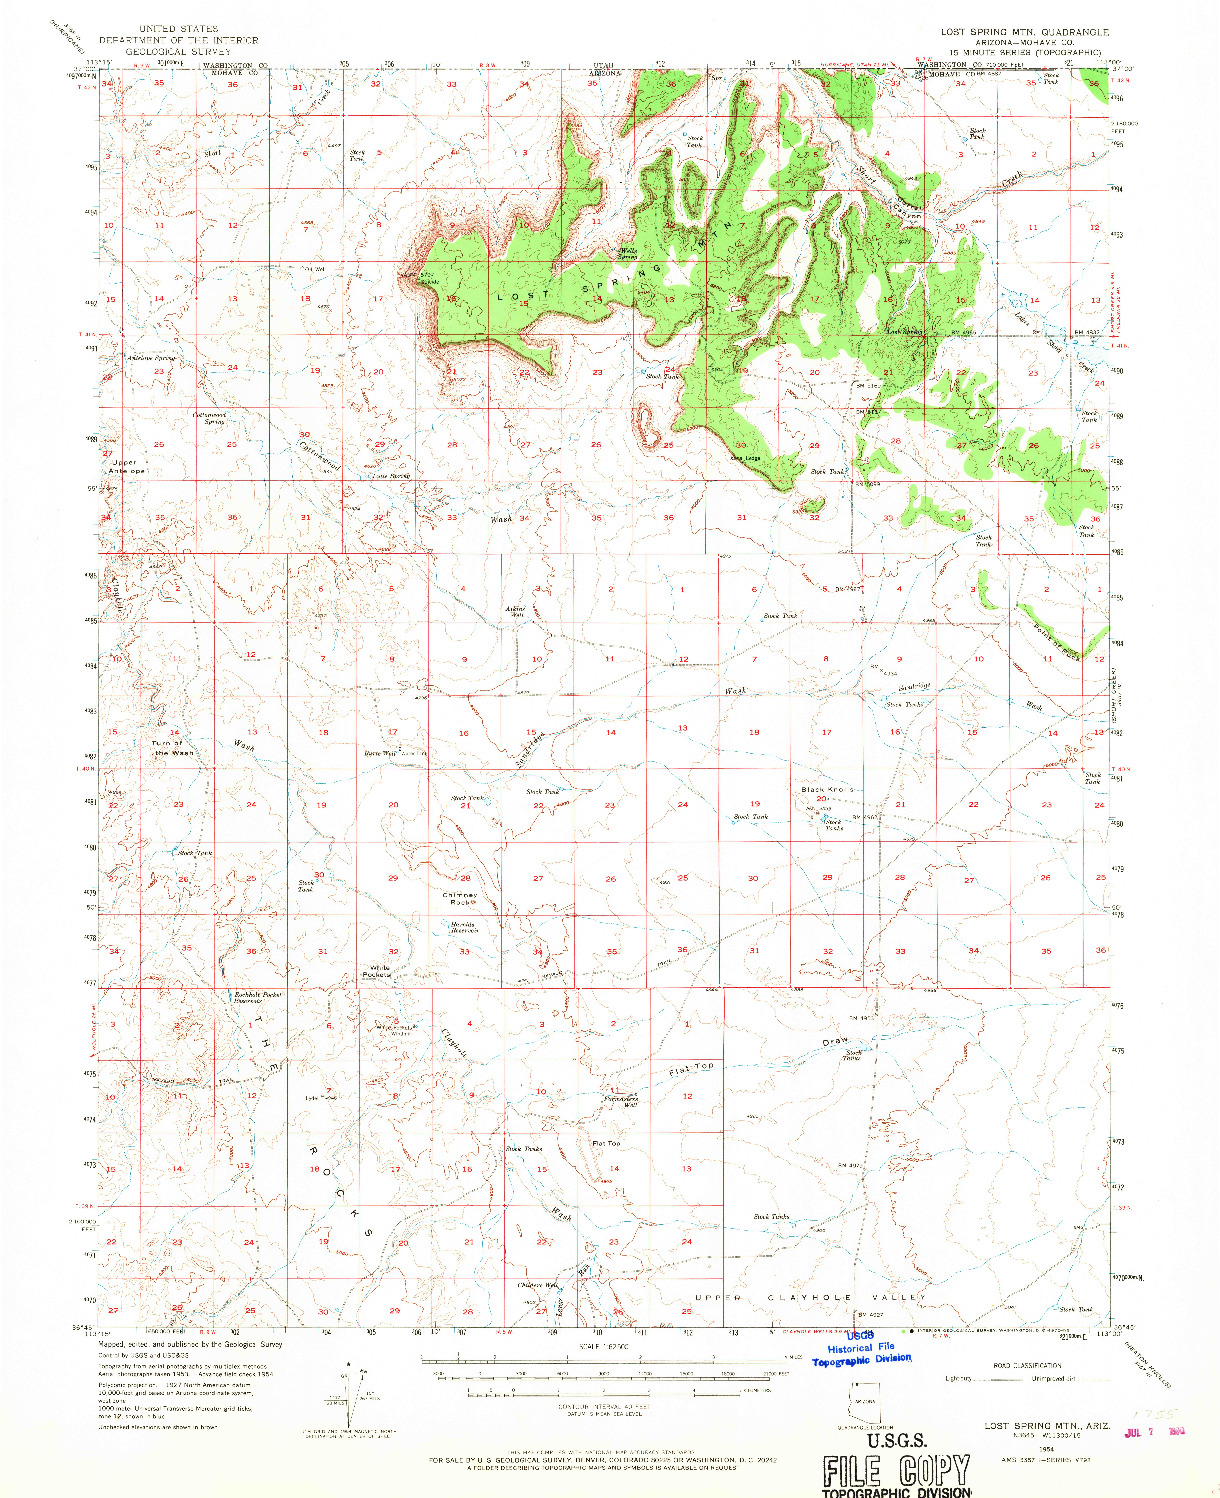 USGS 1:62500-SCALE QUADRANGLE FOR LOST SPRING MTN, AZ 1954